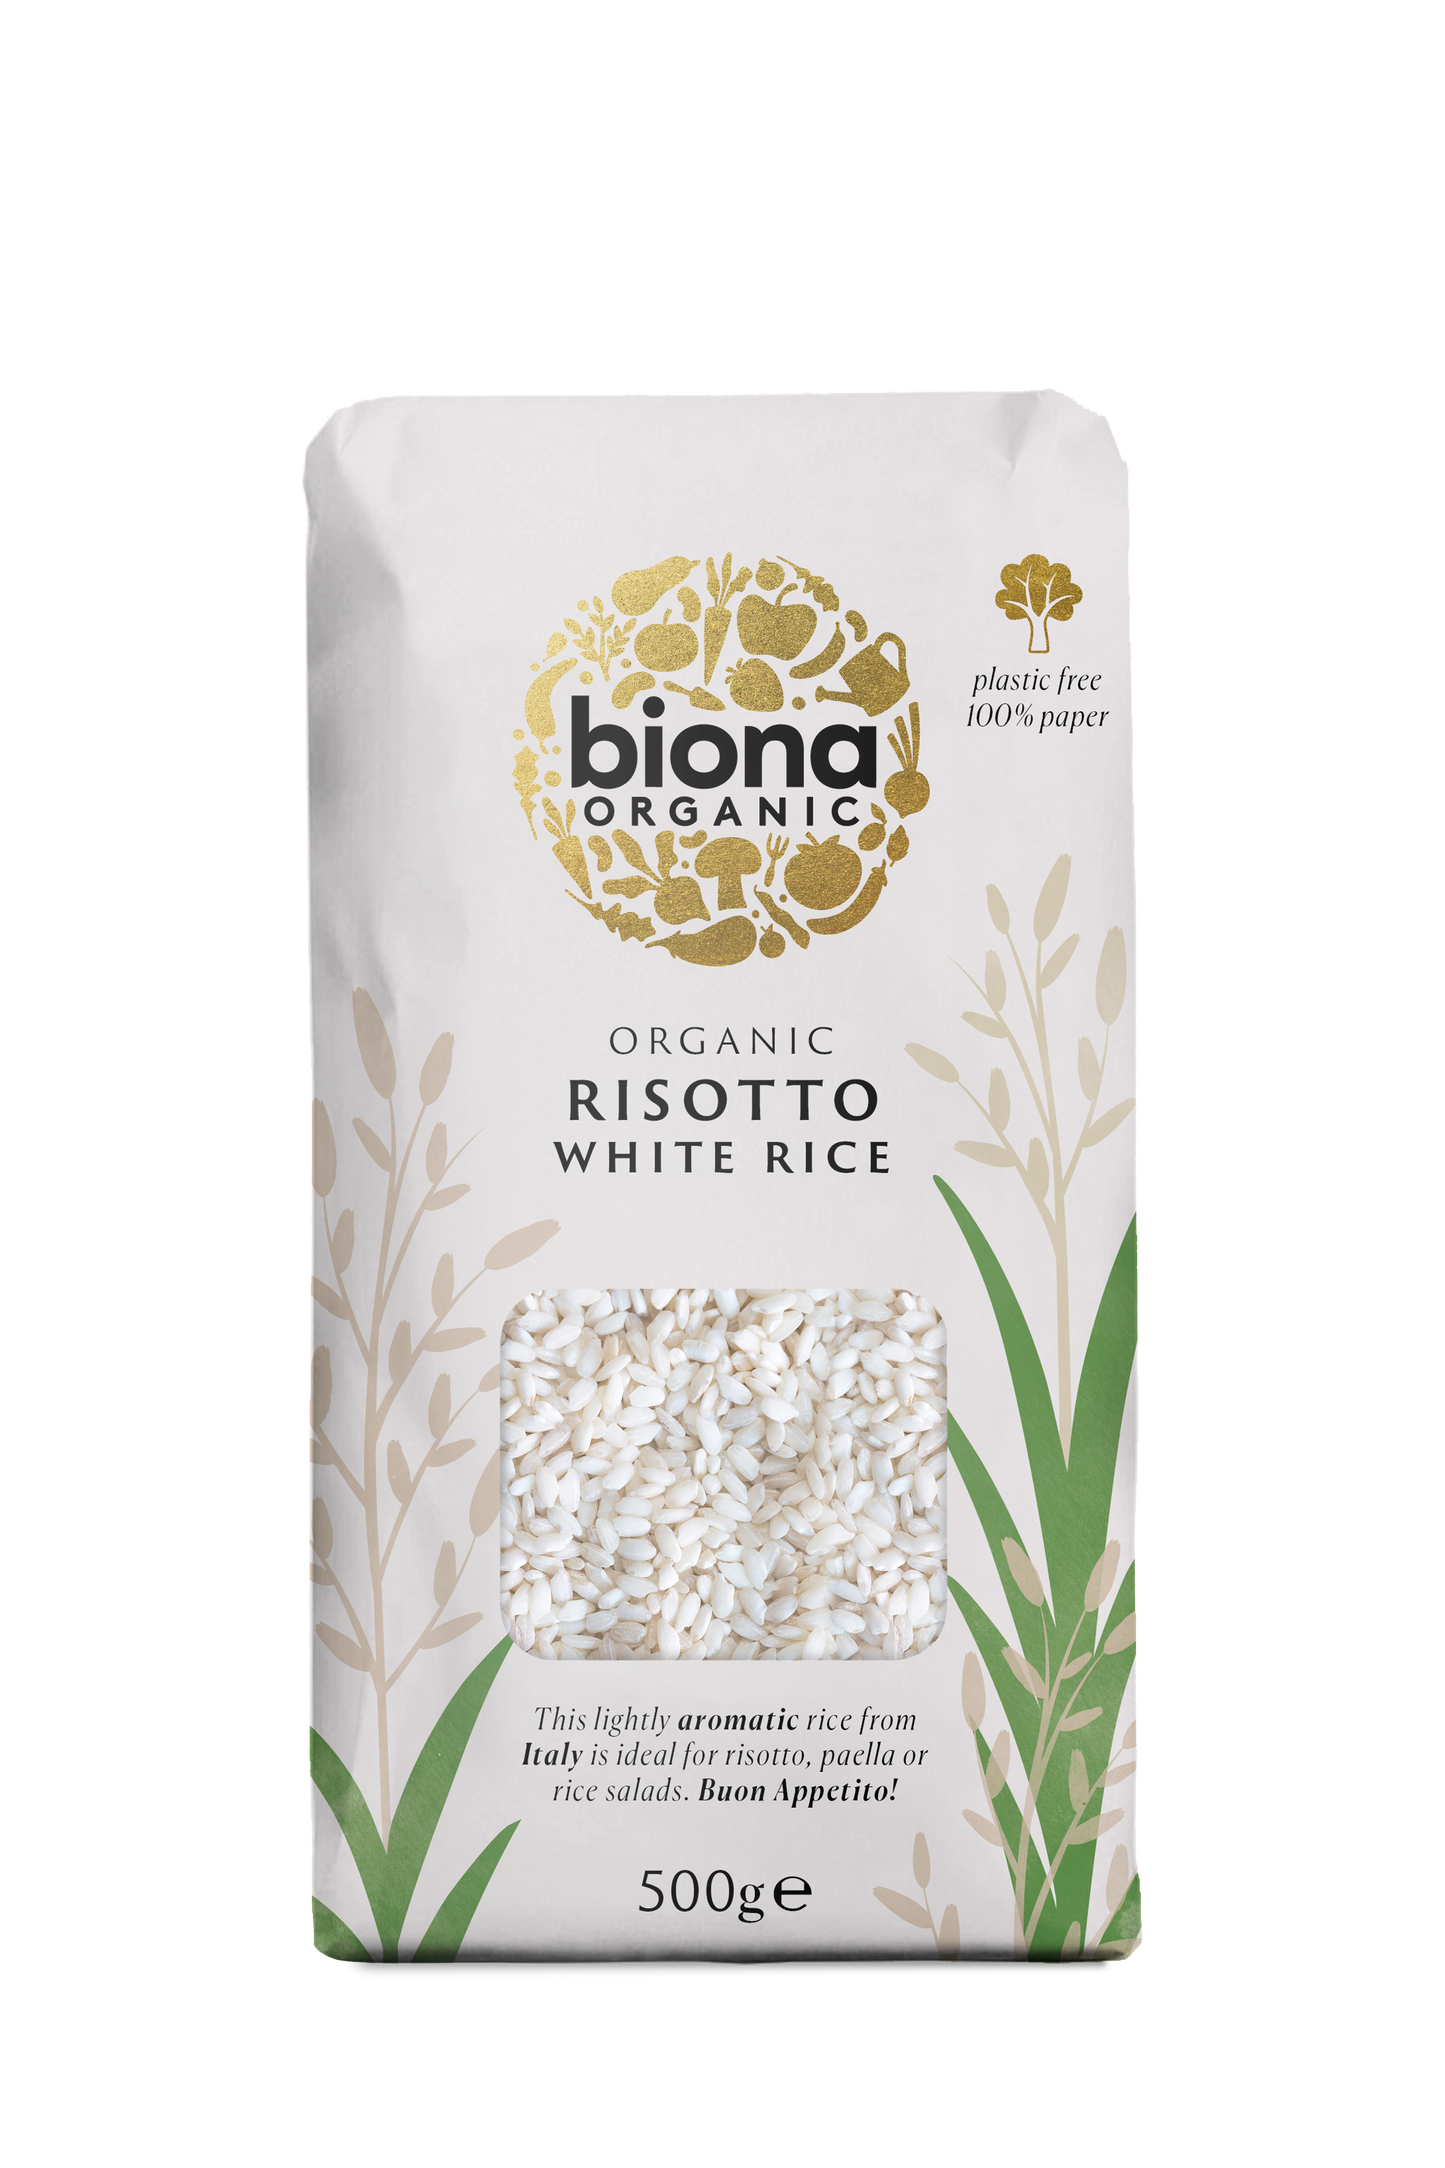 Biona Organic White Risotto Rice 500g Pack of 4